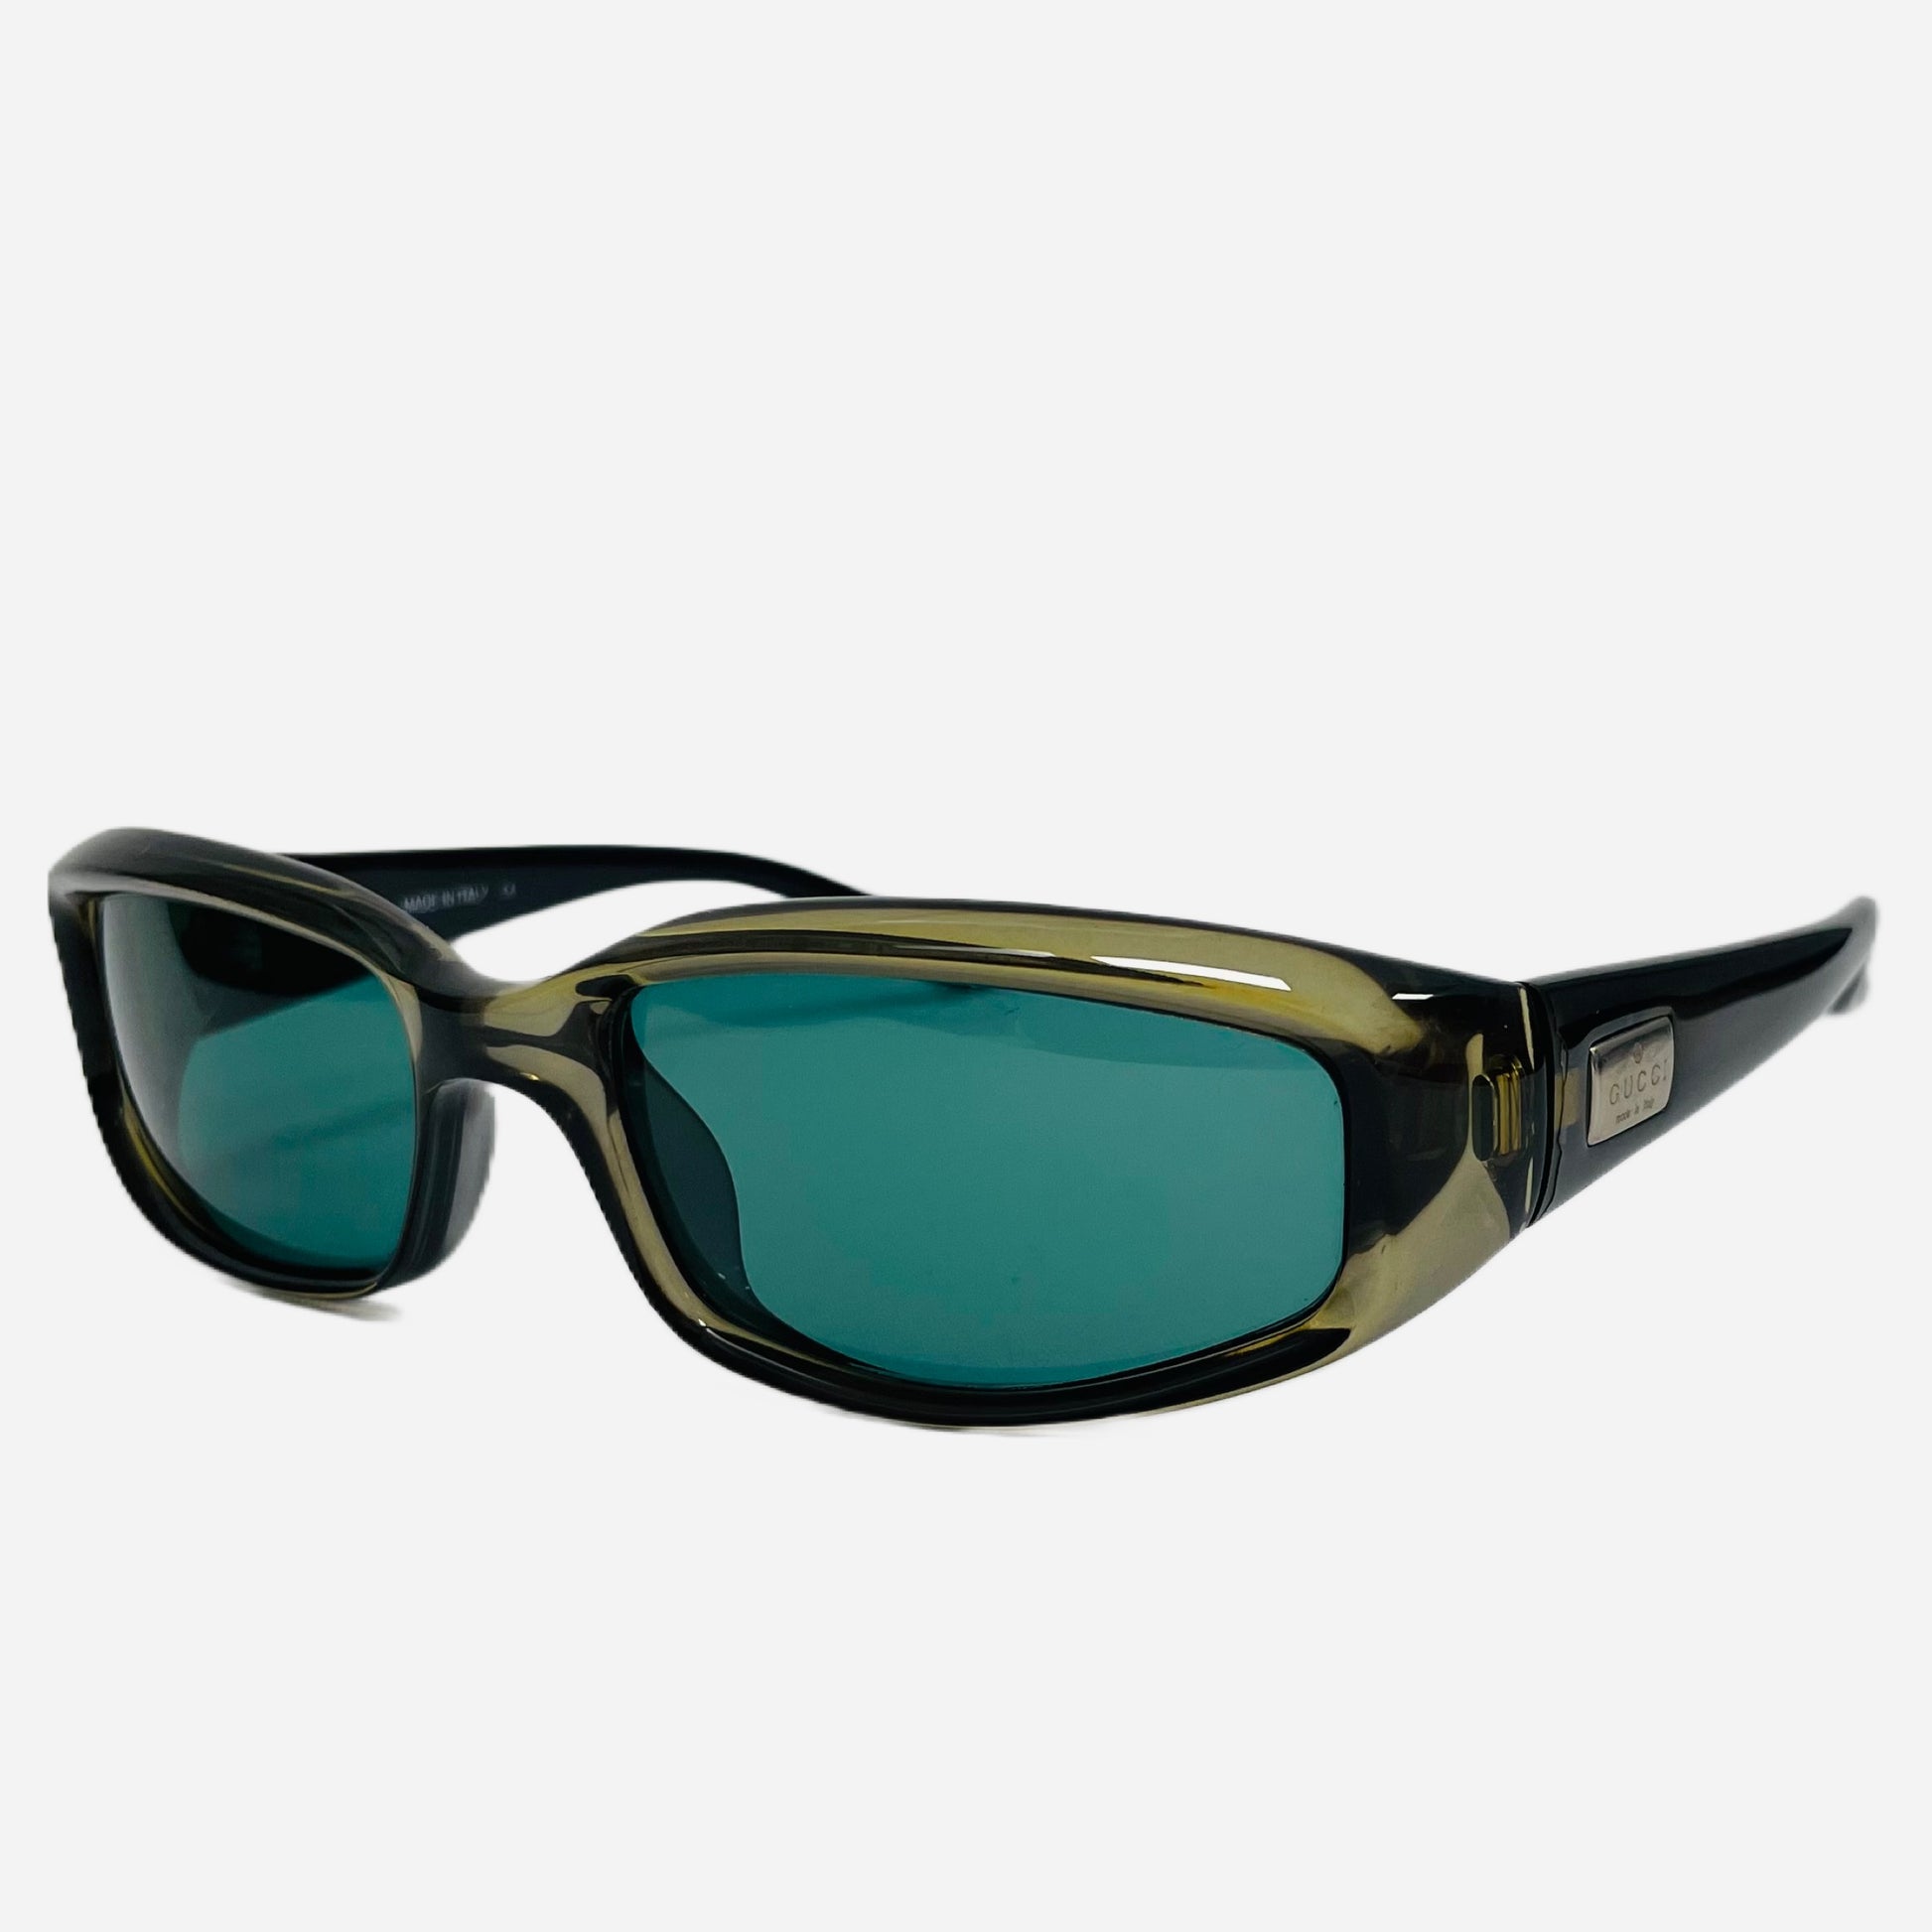 Vintage-Gucci-Sunglasses-Sonnenbrille-Schnelle-Brille-90s-2454-_S-The-Seekers-front